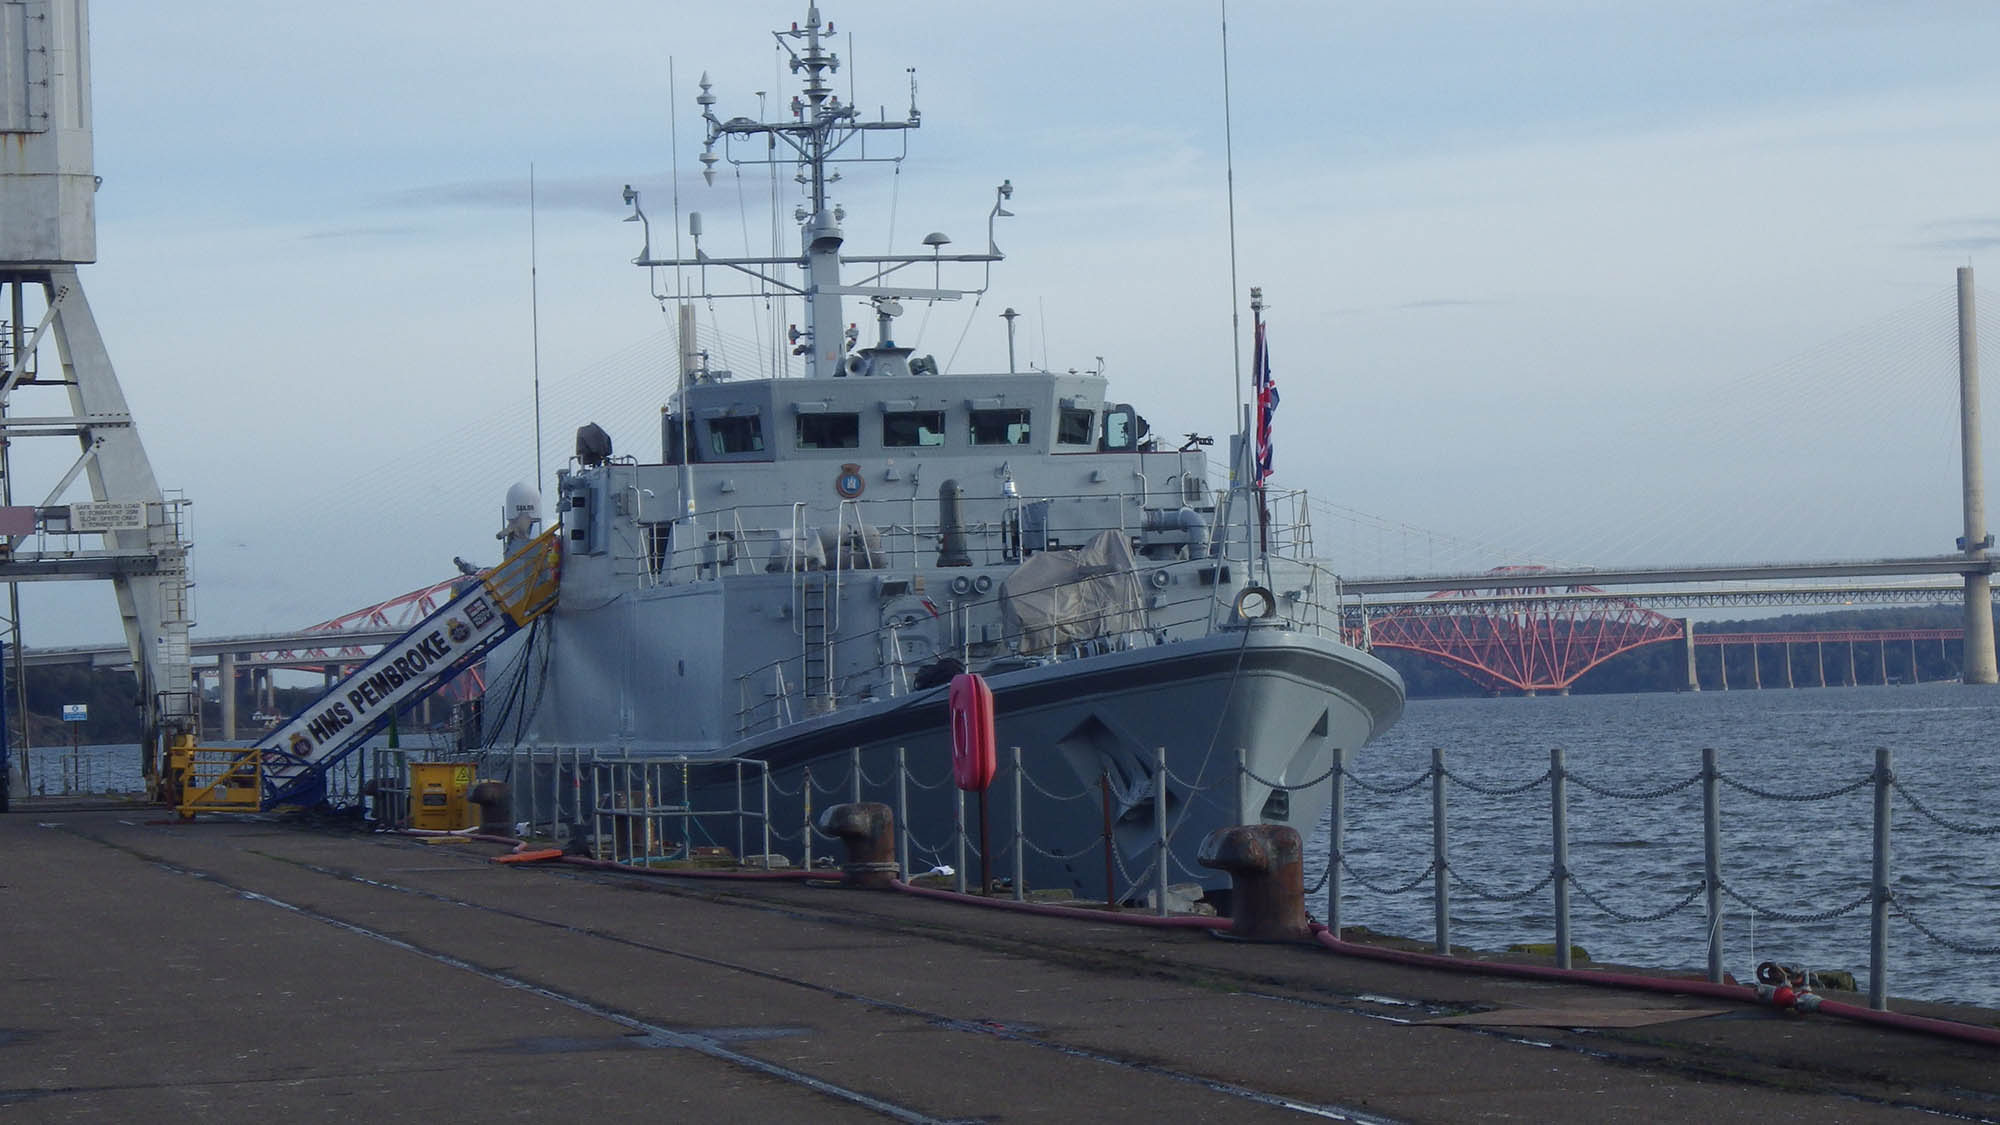 A naval ship at dockside